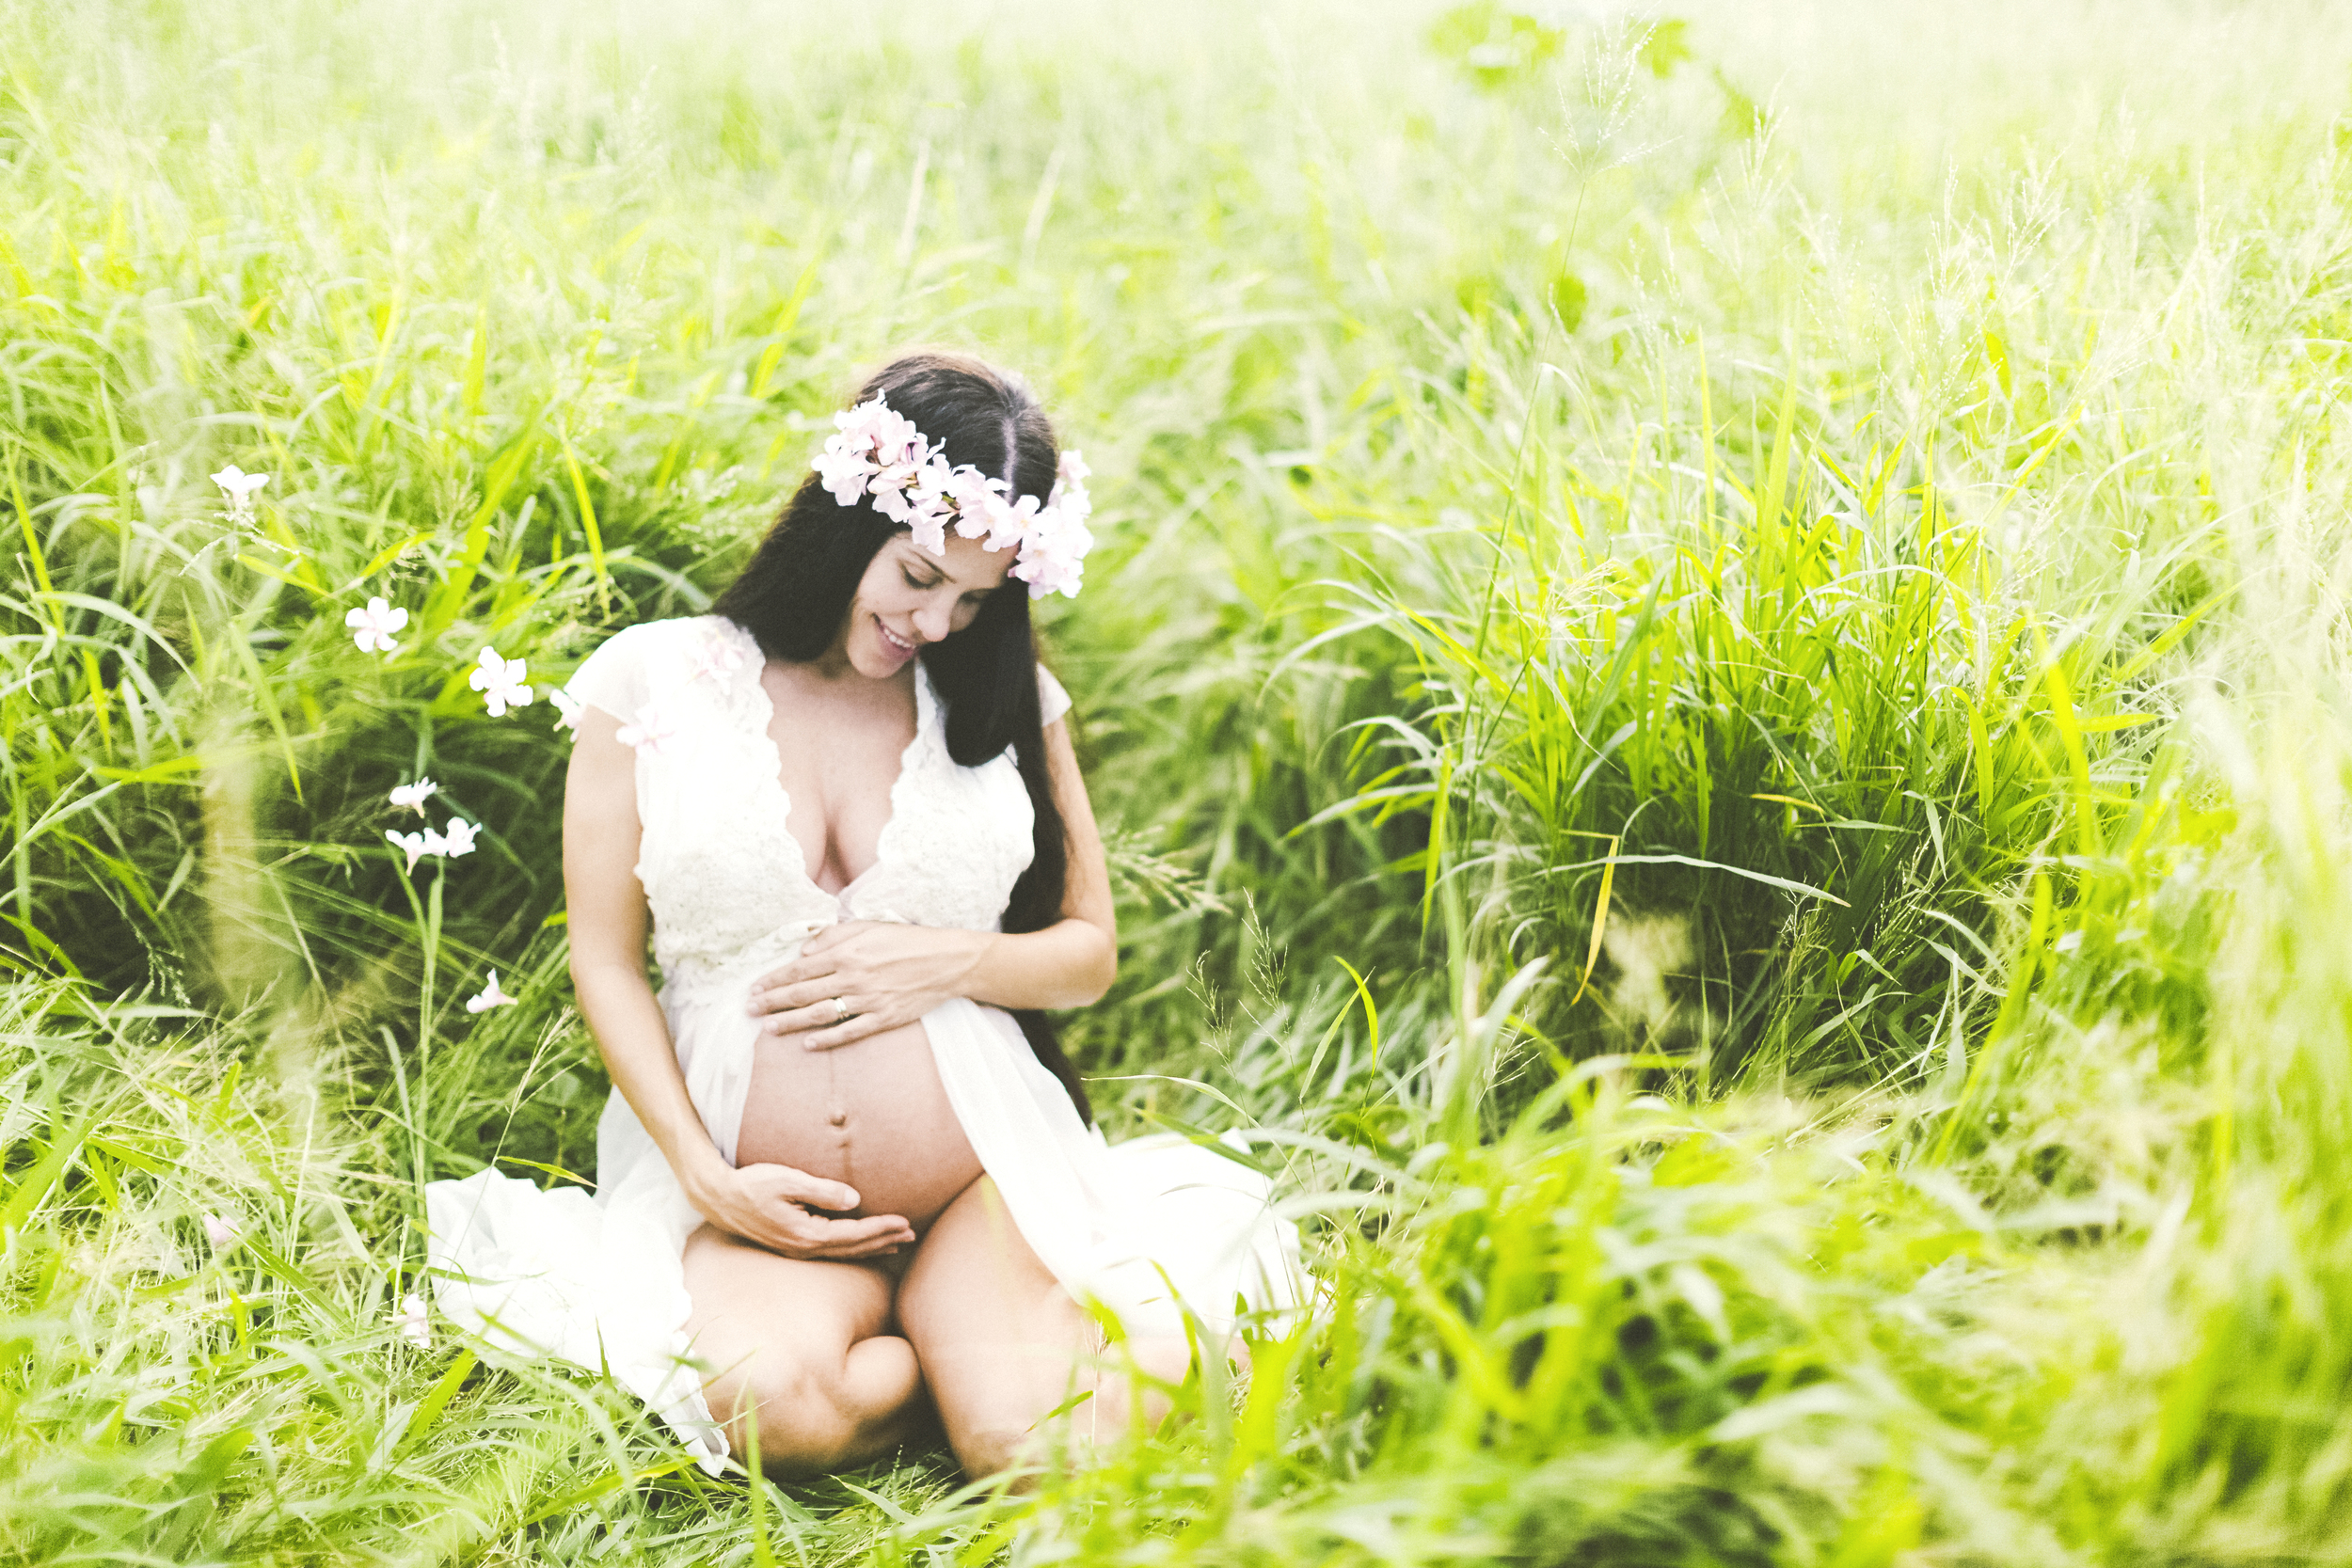 angie-diaz-photography-maui-maternity-twins-2.jpg